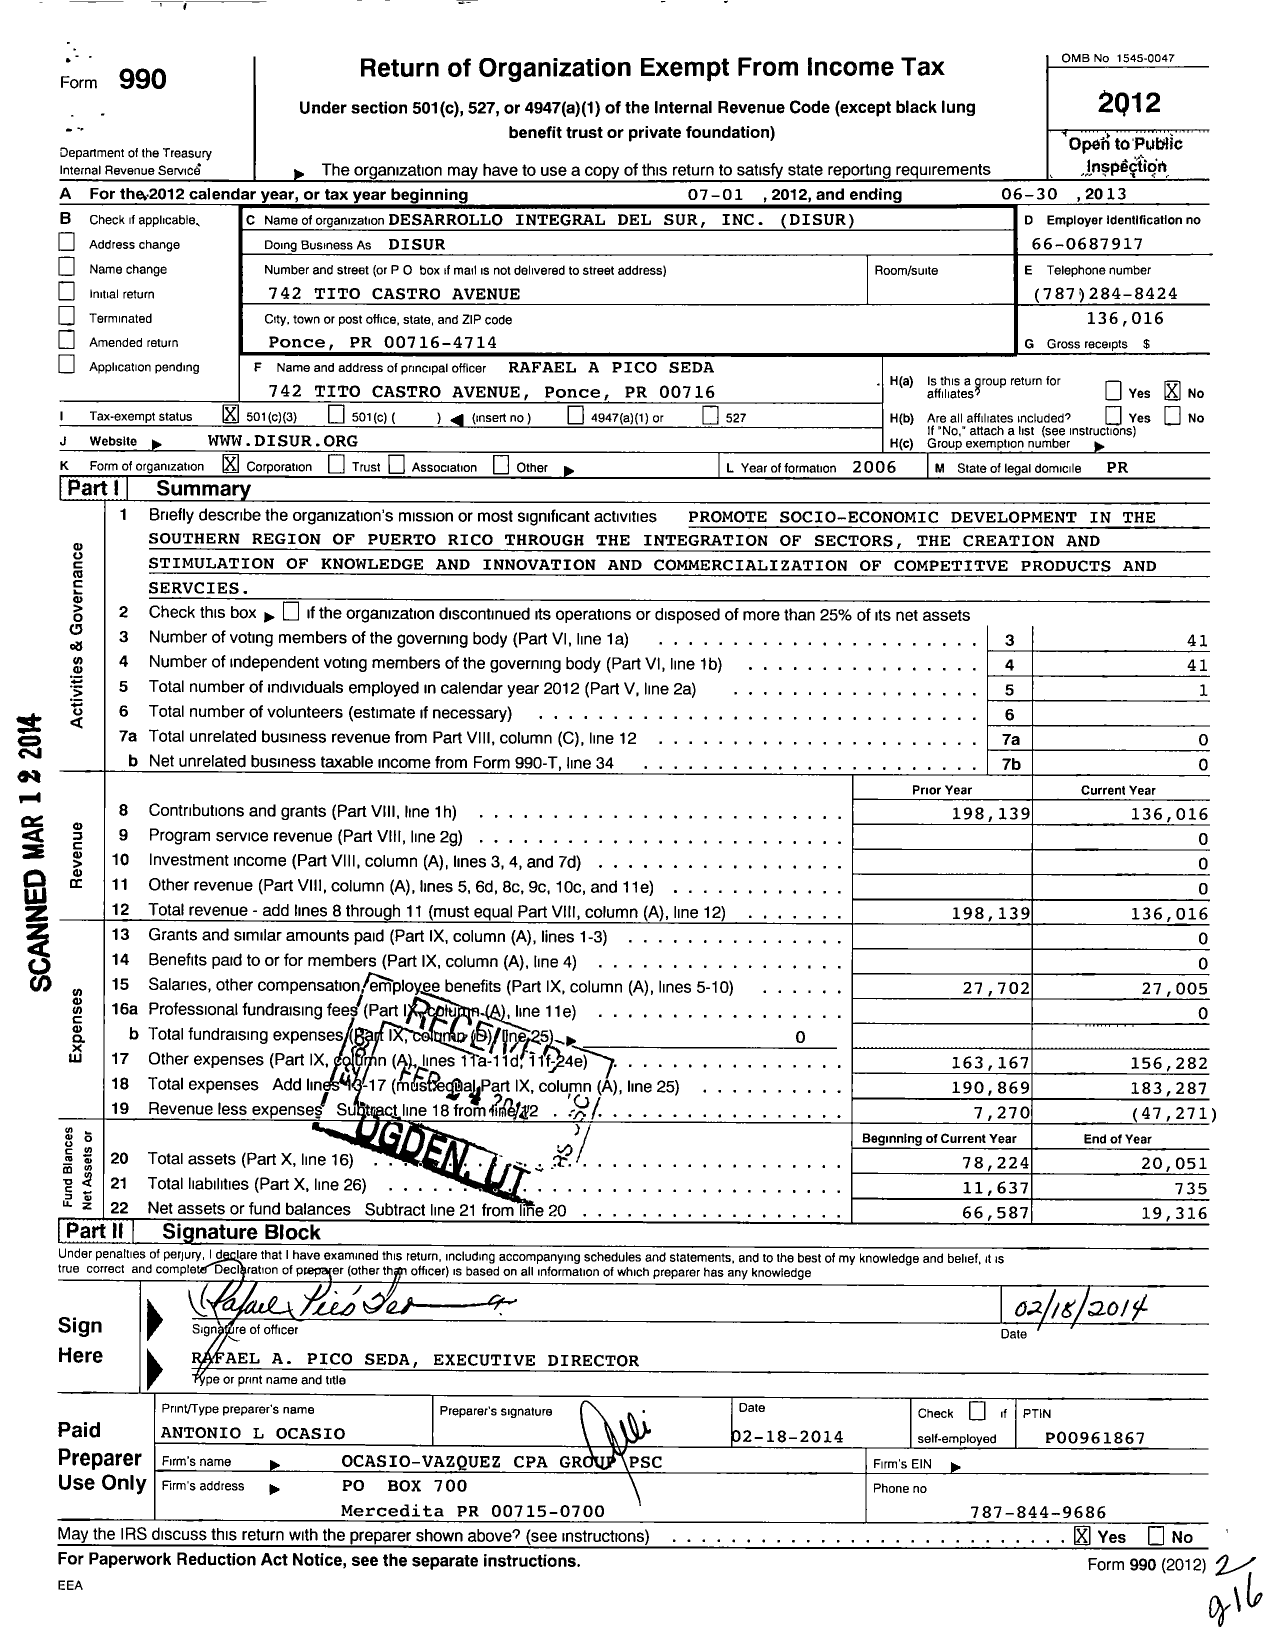 Image of first page of 2012 Form 990 for Desarrollo Integral Del Sur Disur